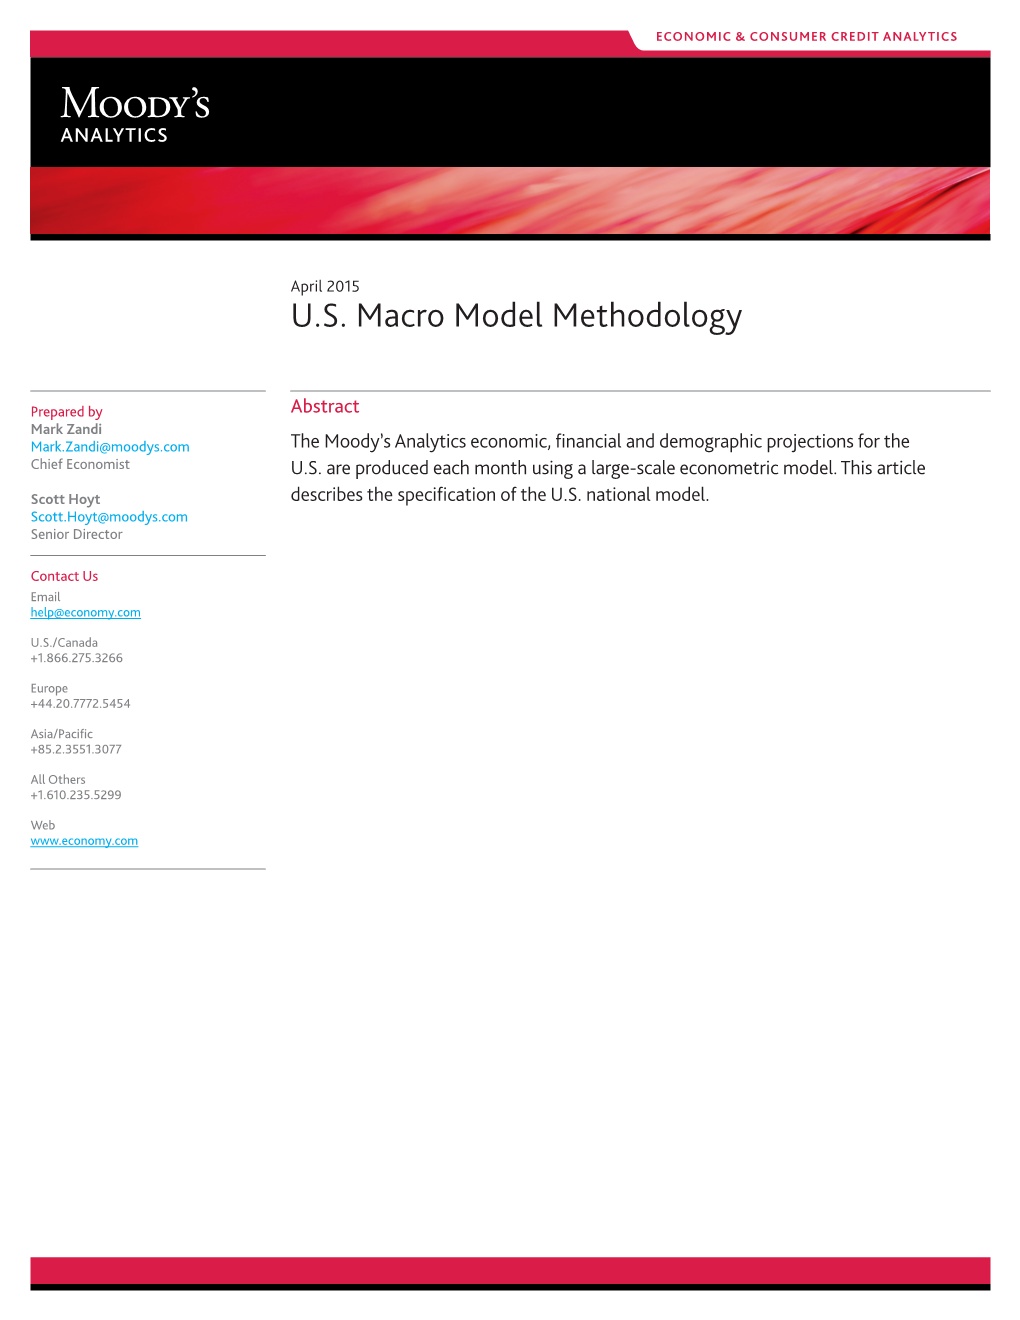 Moody's Analytics U.S. Macro Model Methodology